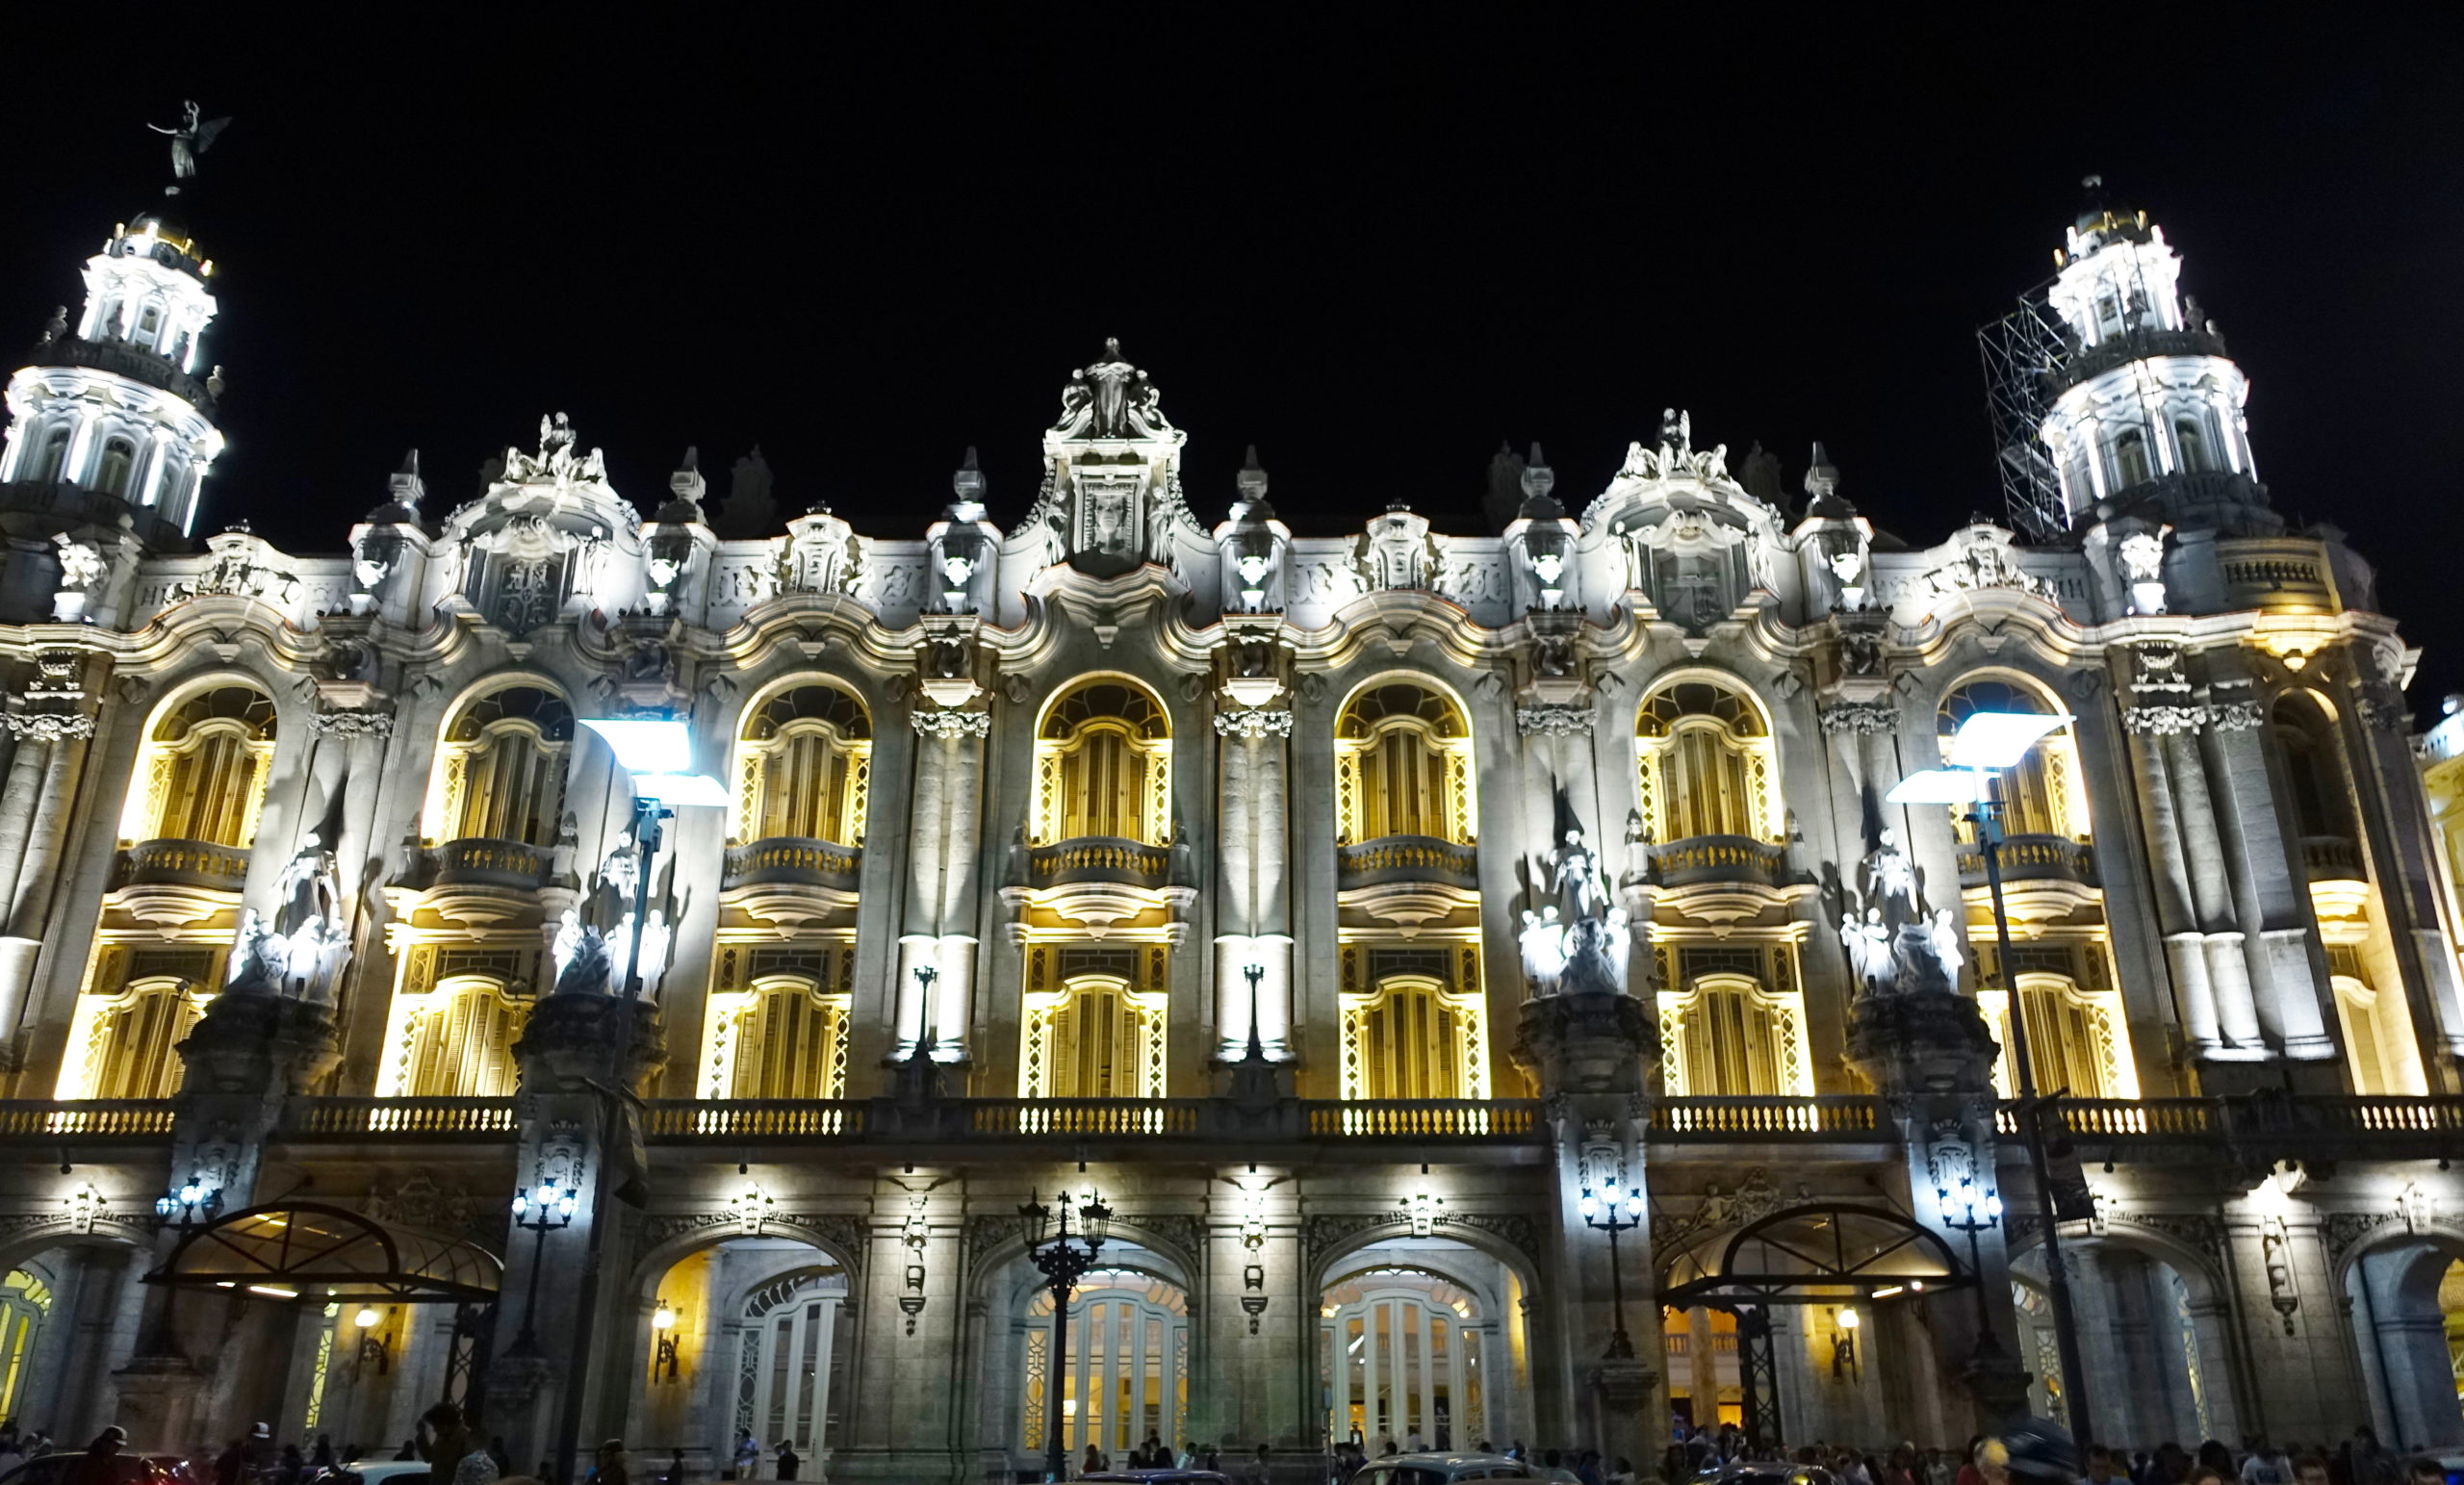 The exterior of the Gran Teatro de La Habana in all its glory.